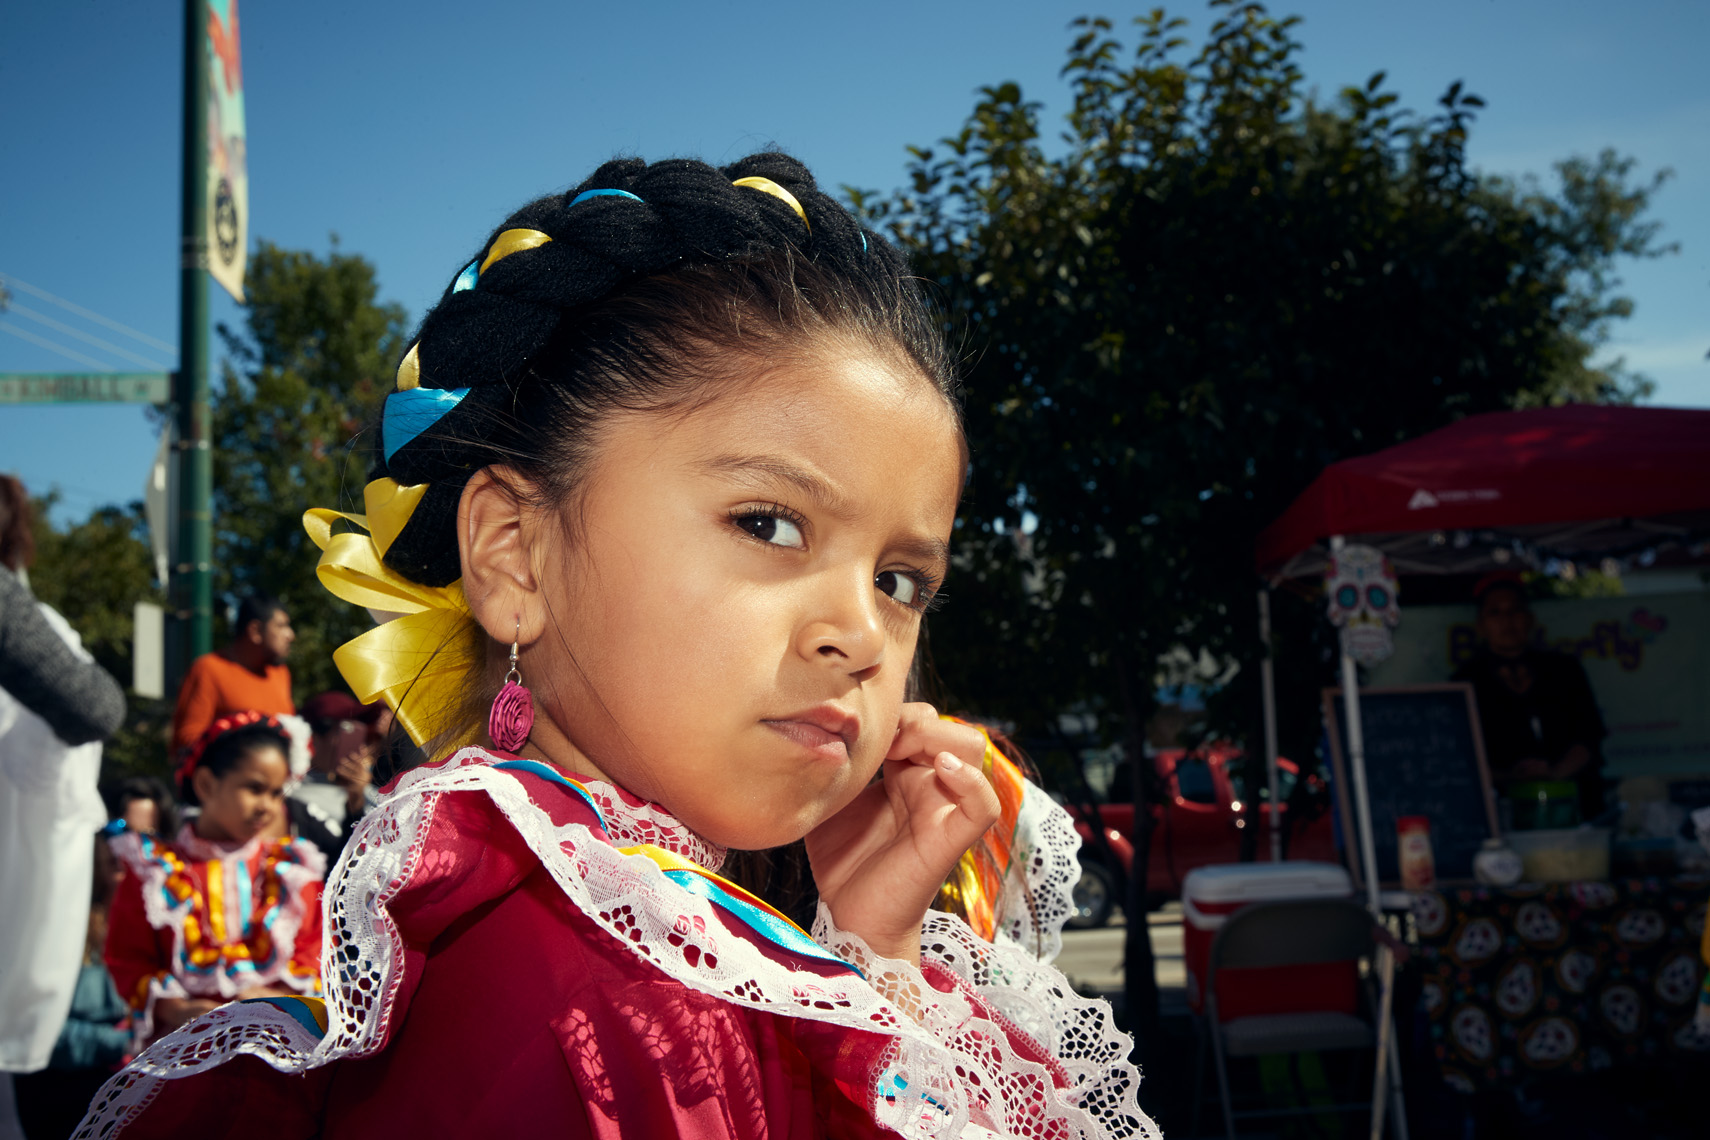 Child dancer dressed in Mexican folk attire | Childrens photography by Saverio Truglia